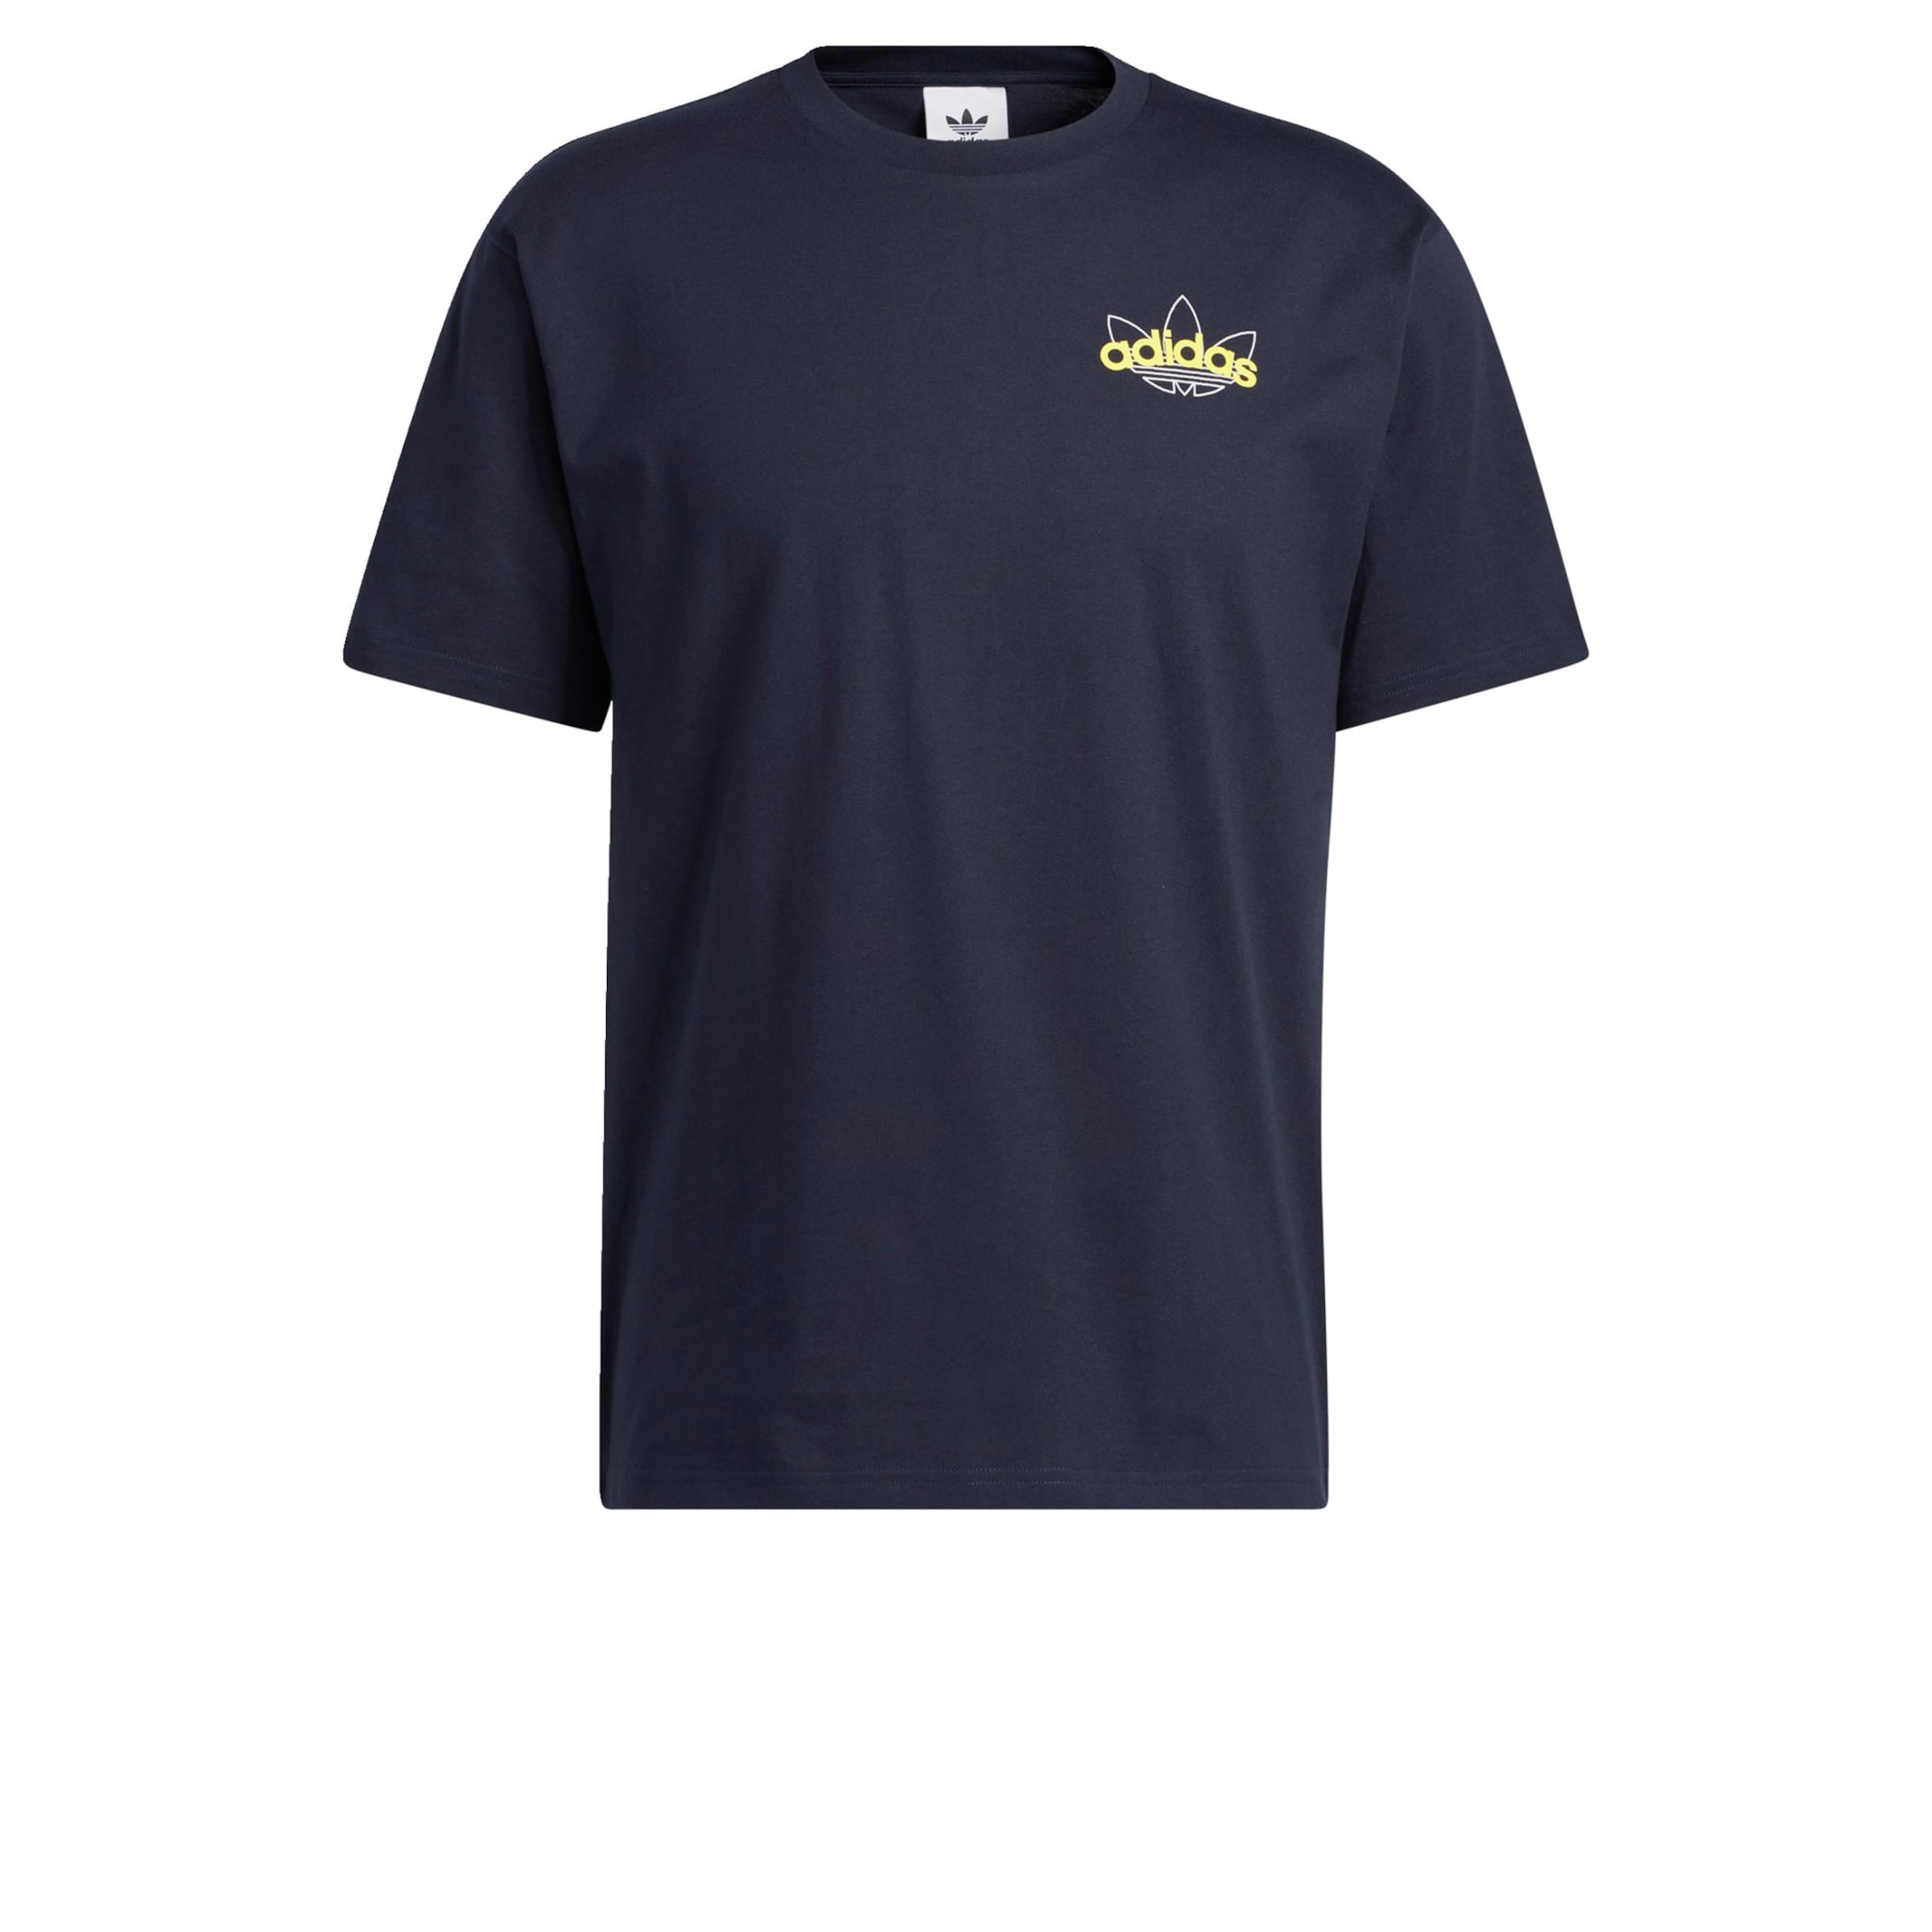 Männer Shirts ADIDAS ORIGINALS Shirt in Navy - QW26889